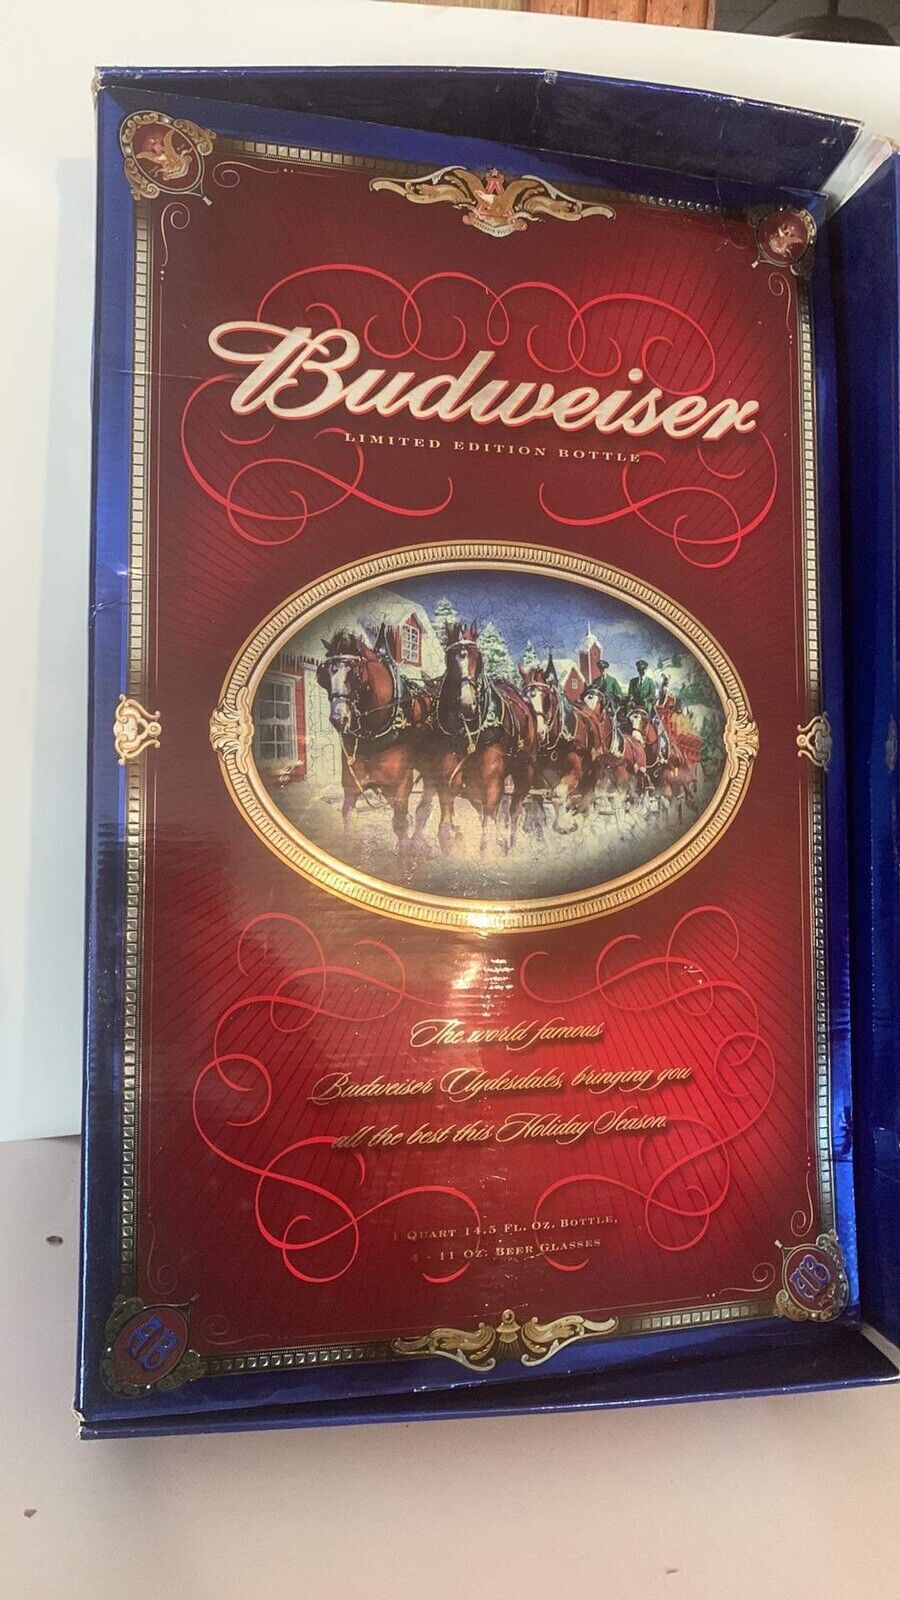 BUDWEISER MILLENNIUM Limited Edition Set Bottle & Four Glasses Original Box